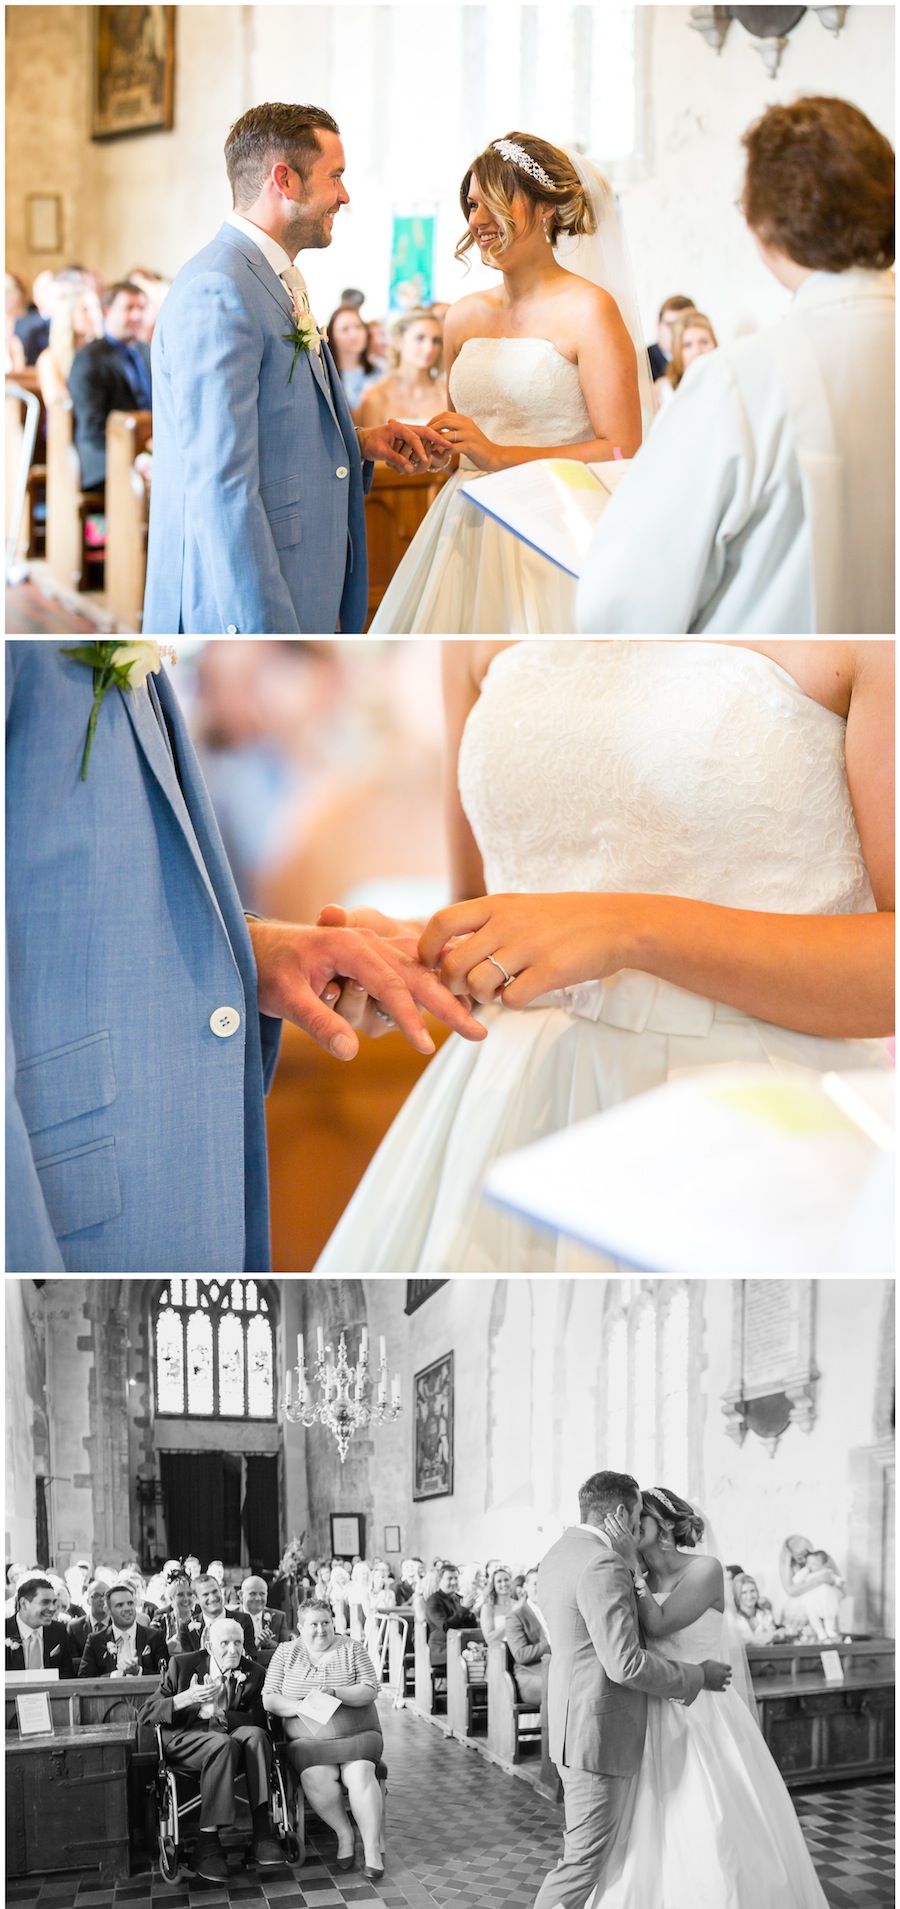 Charing Wedding Photography